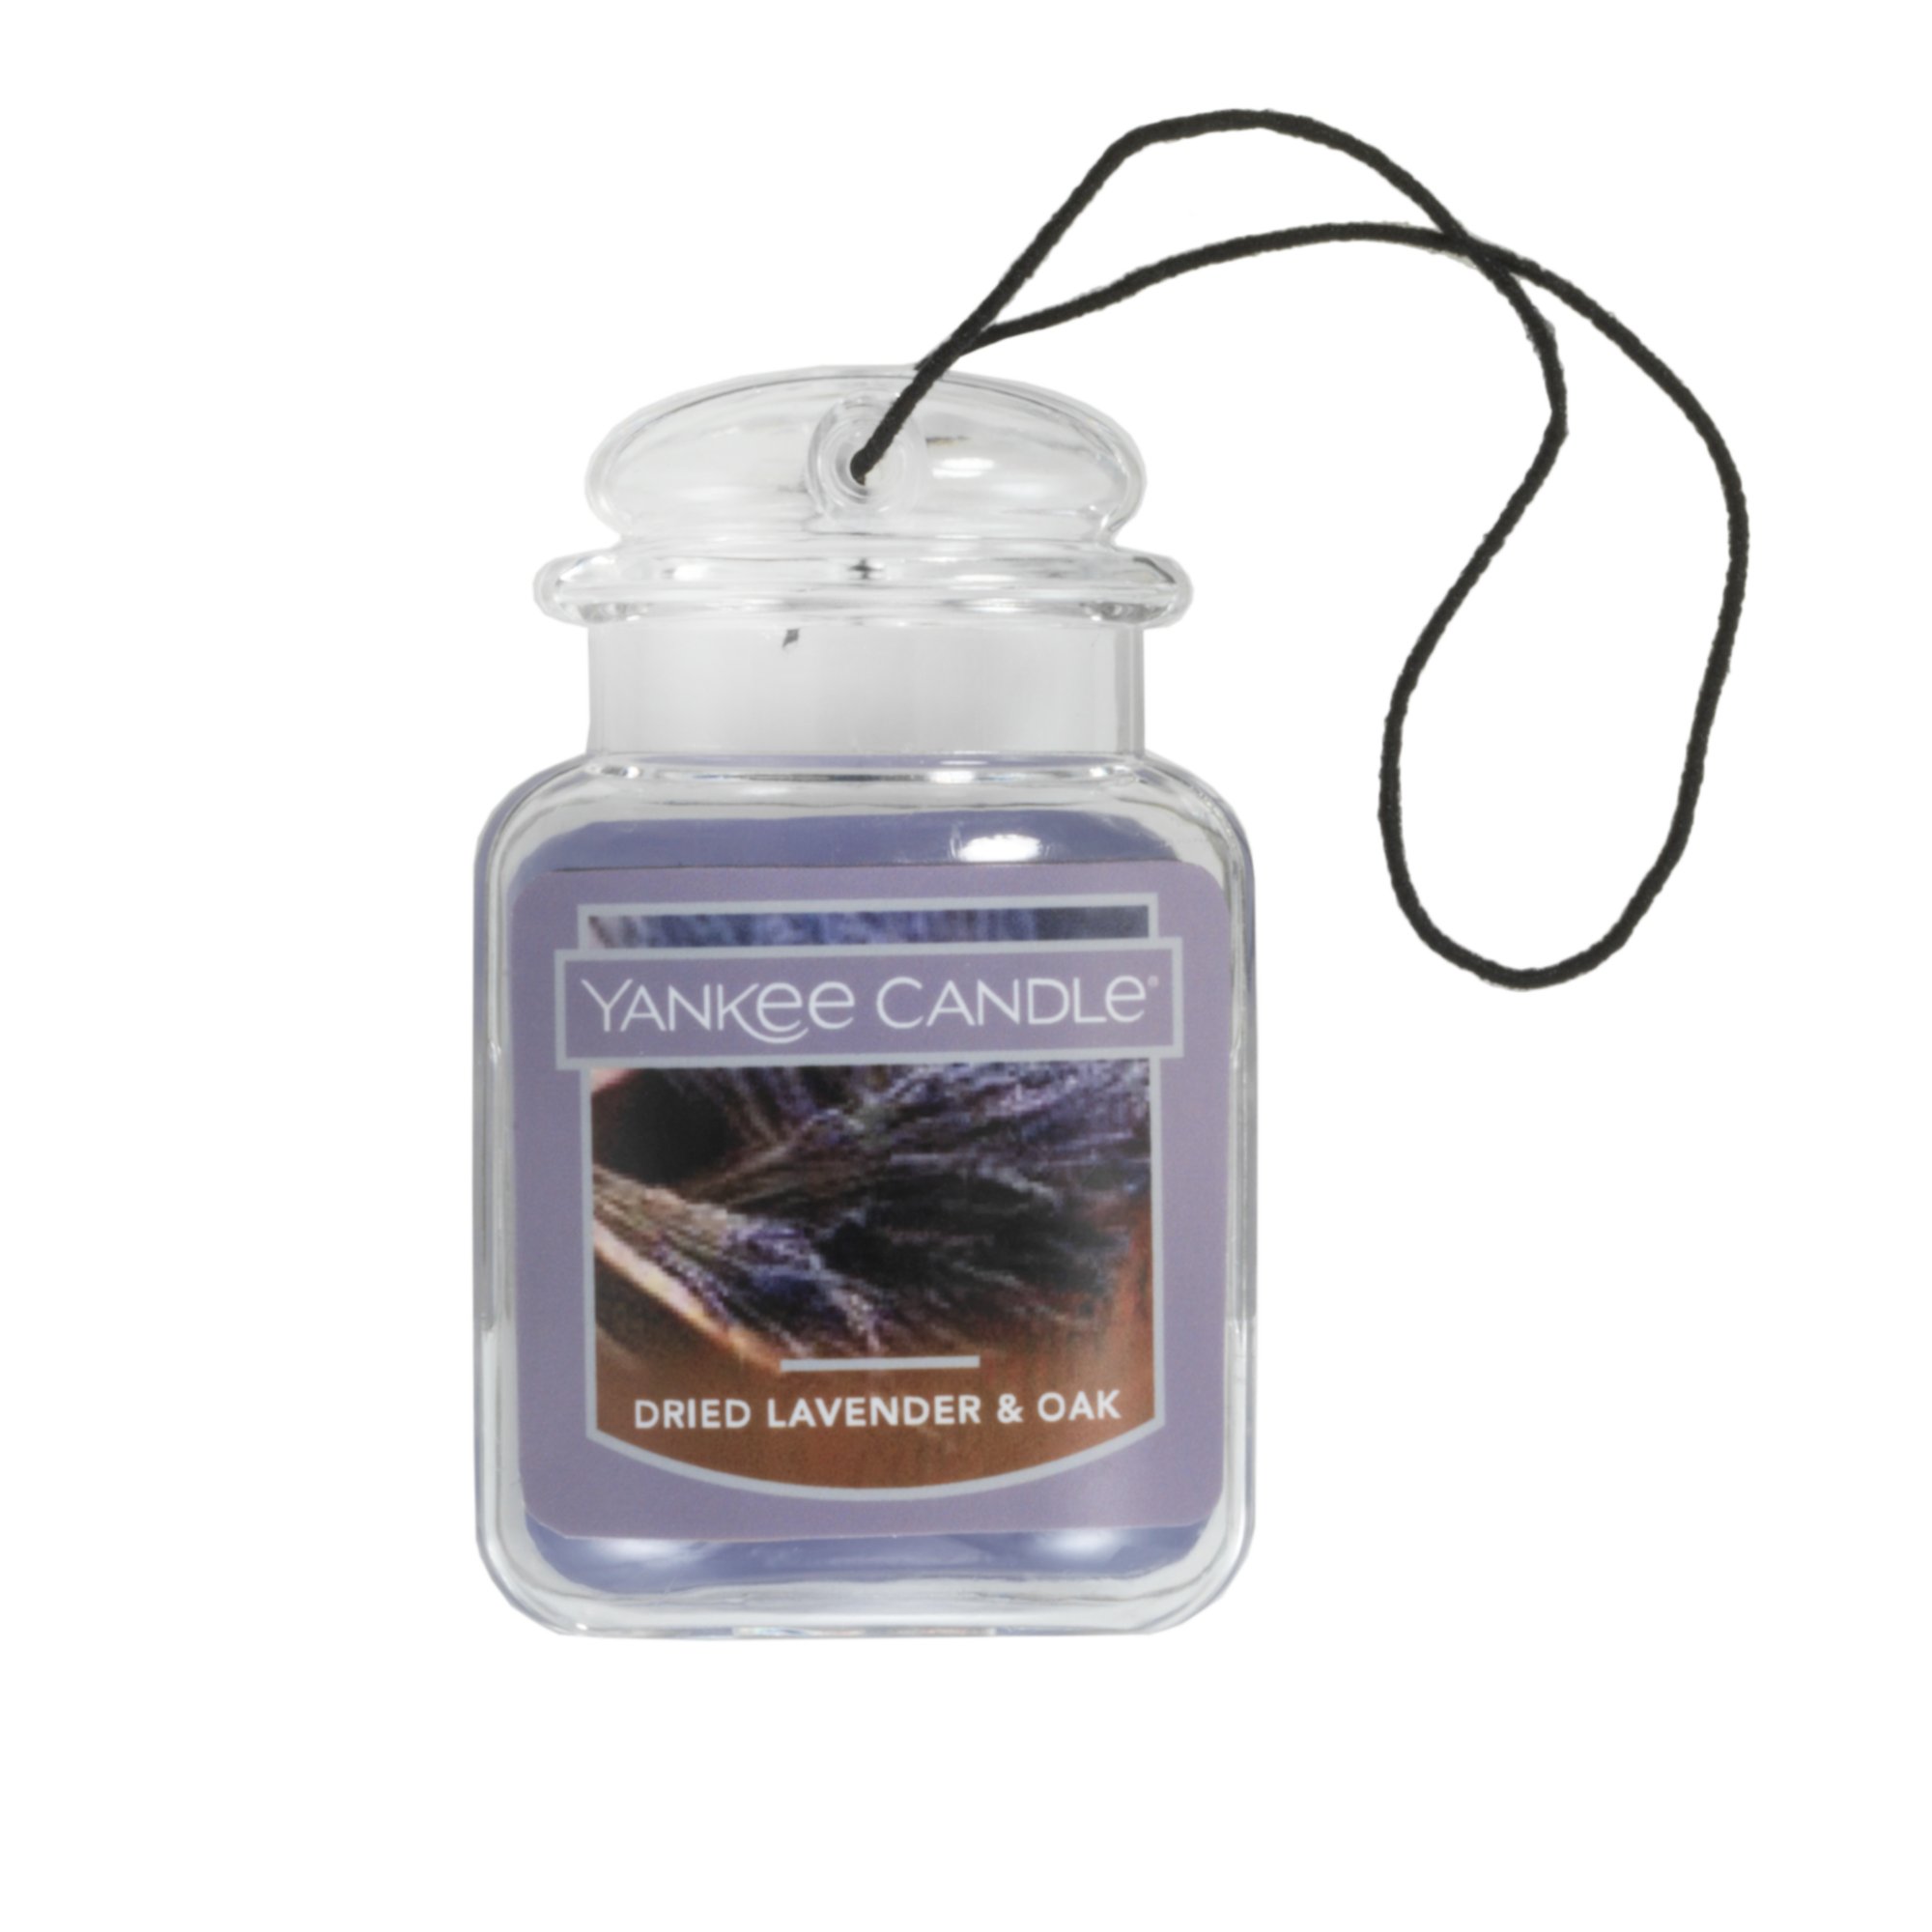 Yankee Candle Dried Lavender & Oak Air Freshener Car Jar Ultimate